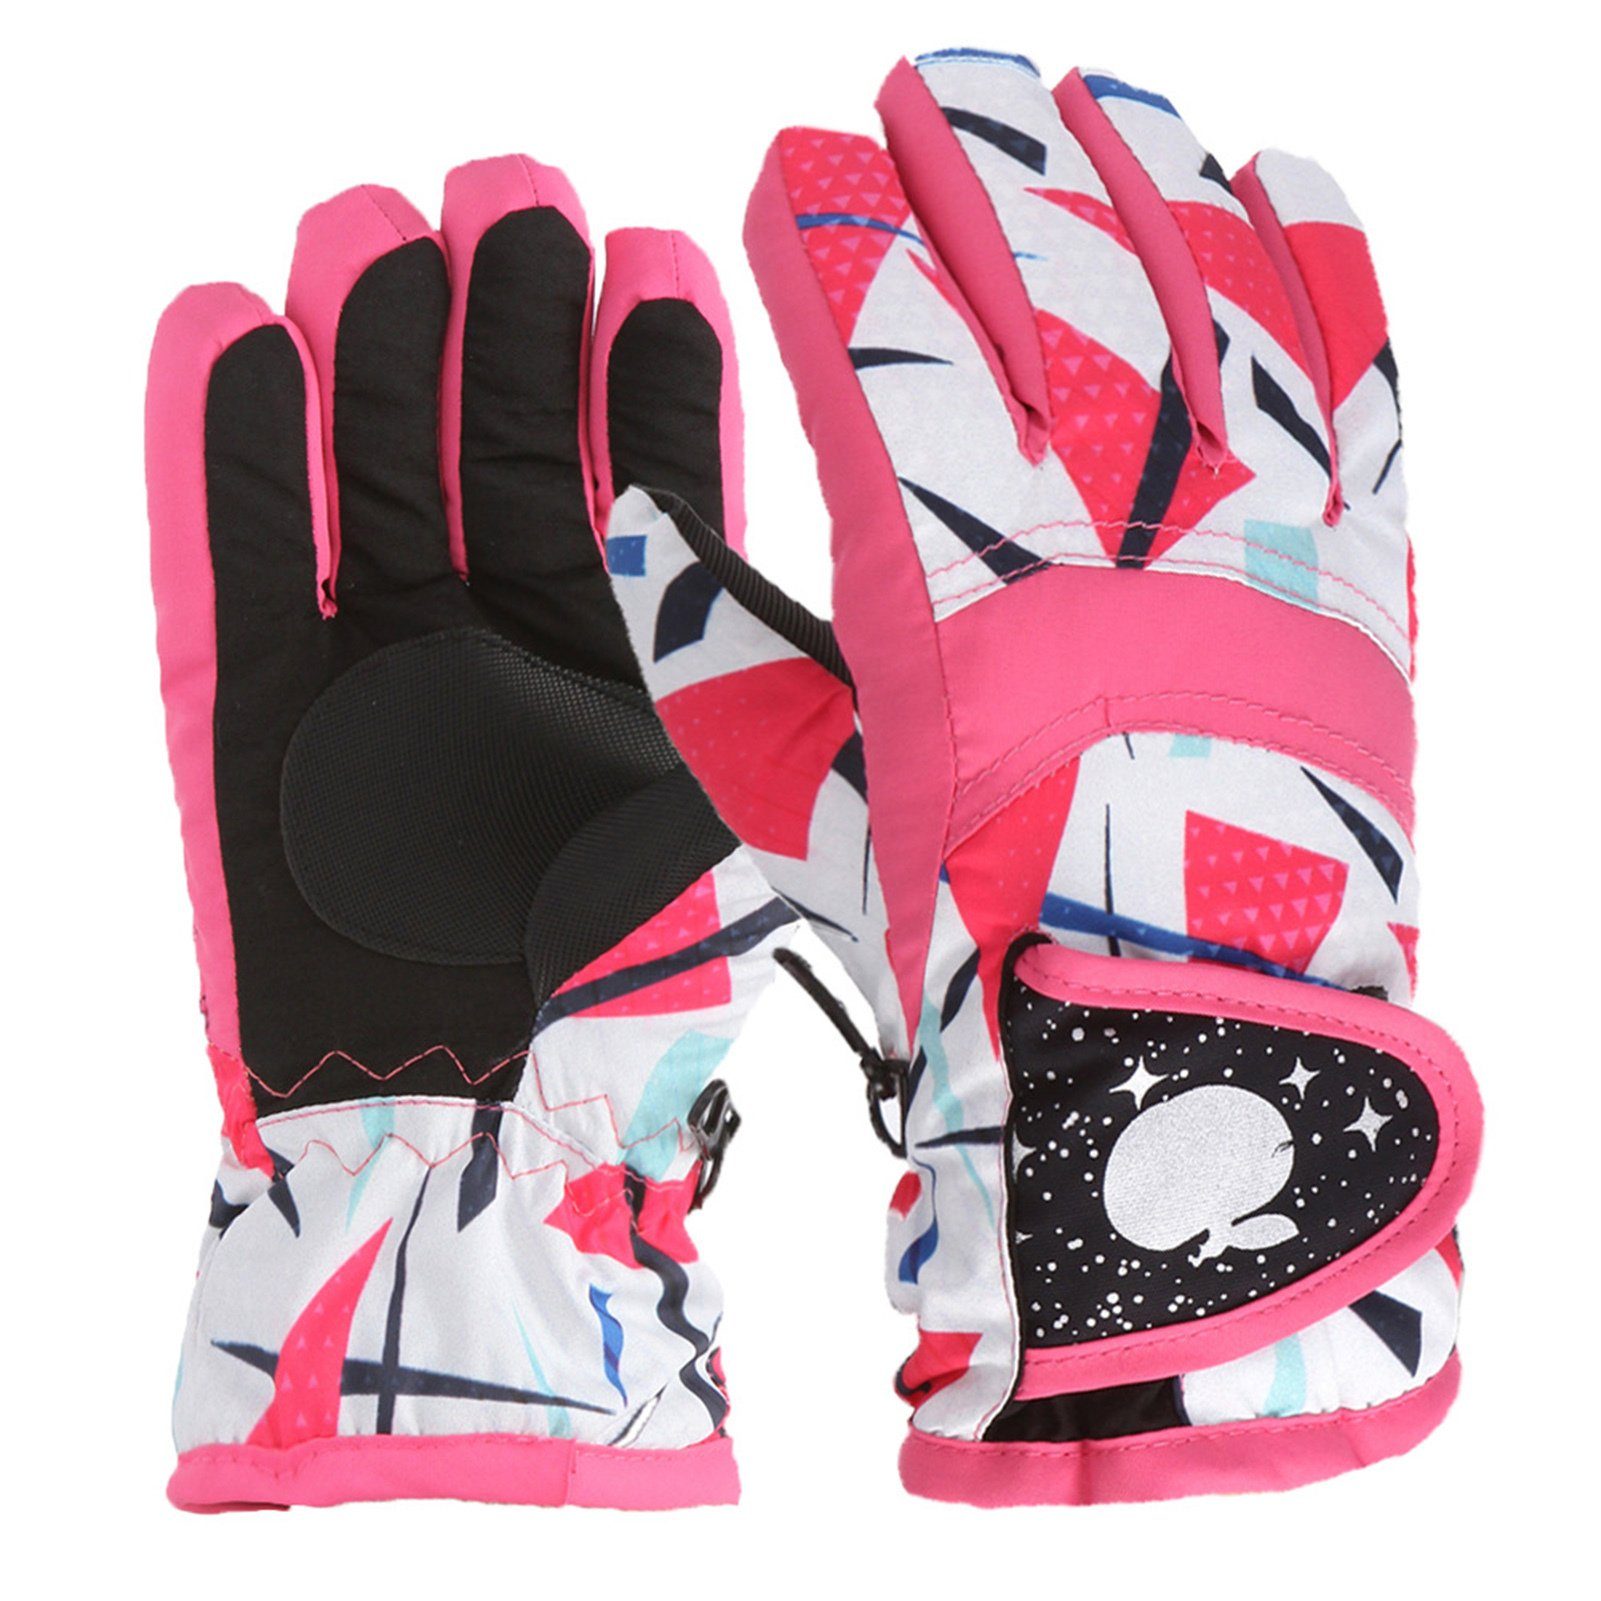 Blusmart Skihandschuhe Kinder-Skihandschuhe Mit Cartoon-Muster, Bequeme Handschuhe Für pink